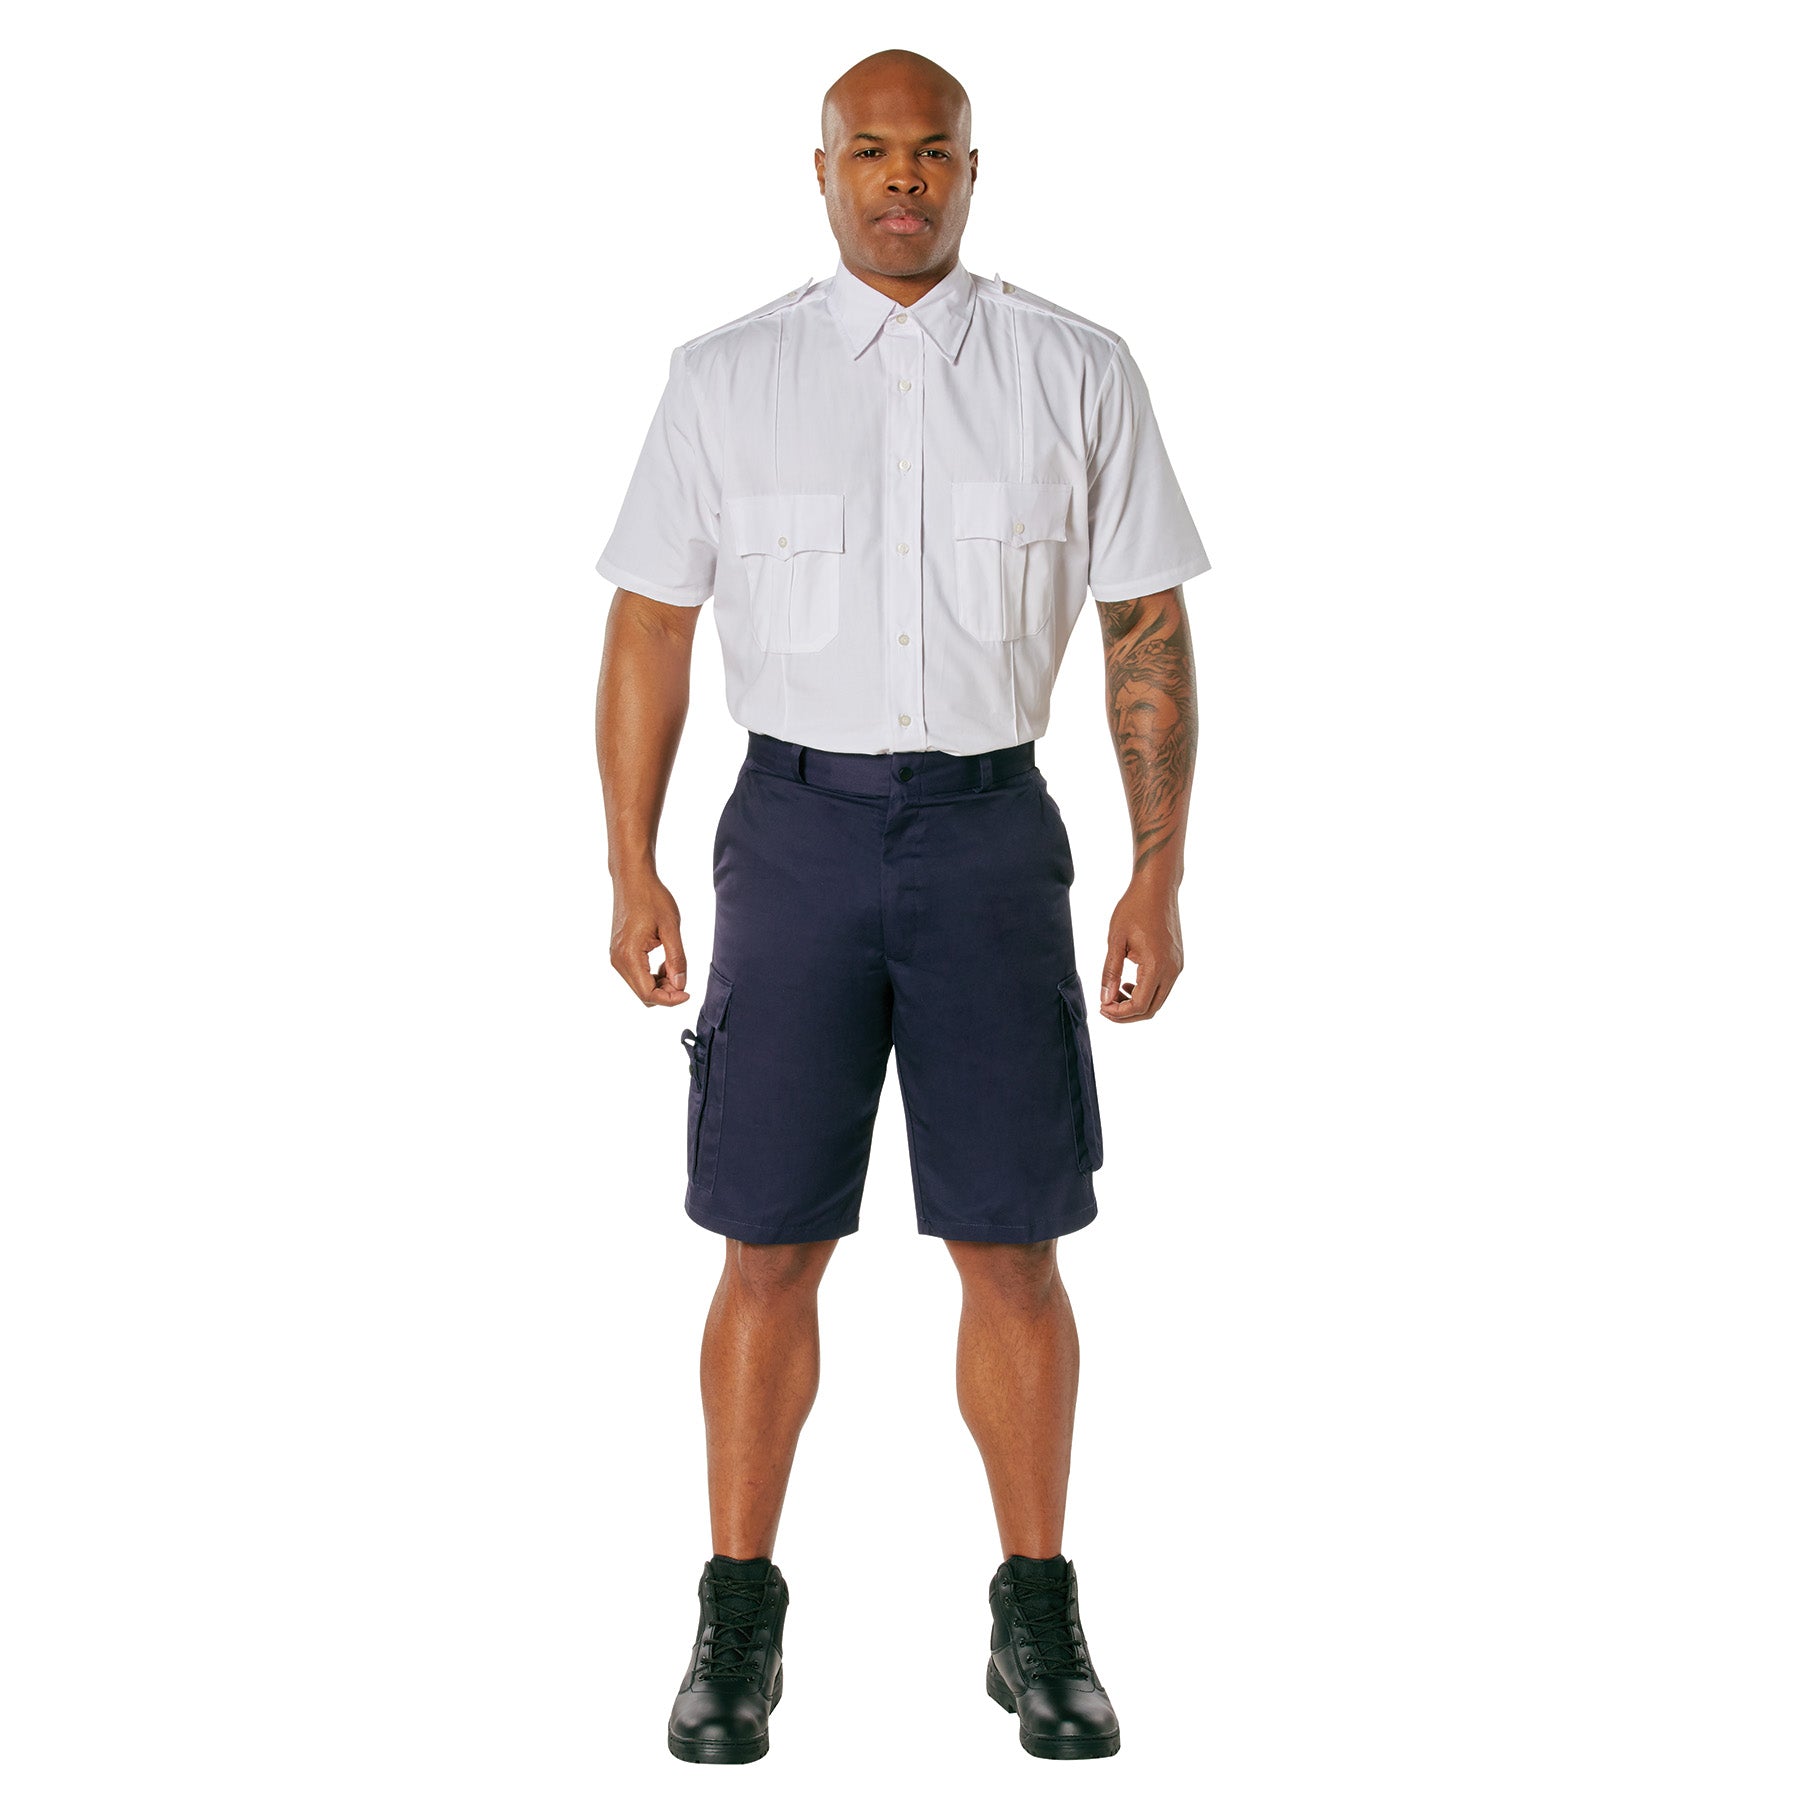 [Public Safety] Poly/Cotton EMT Shorts Navy Blue